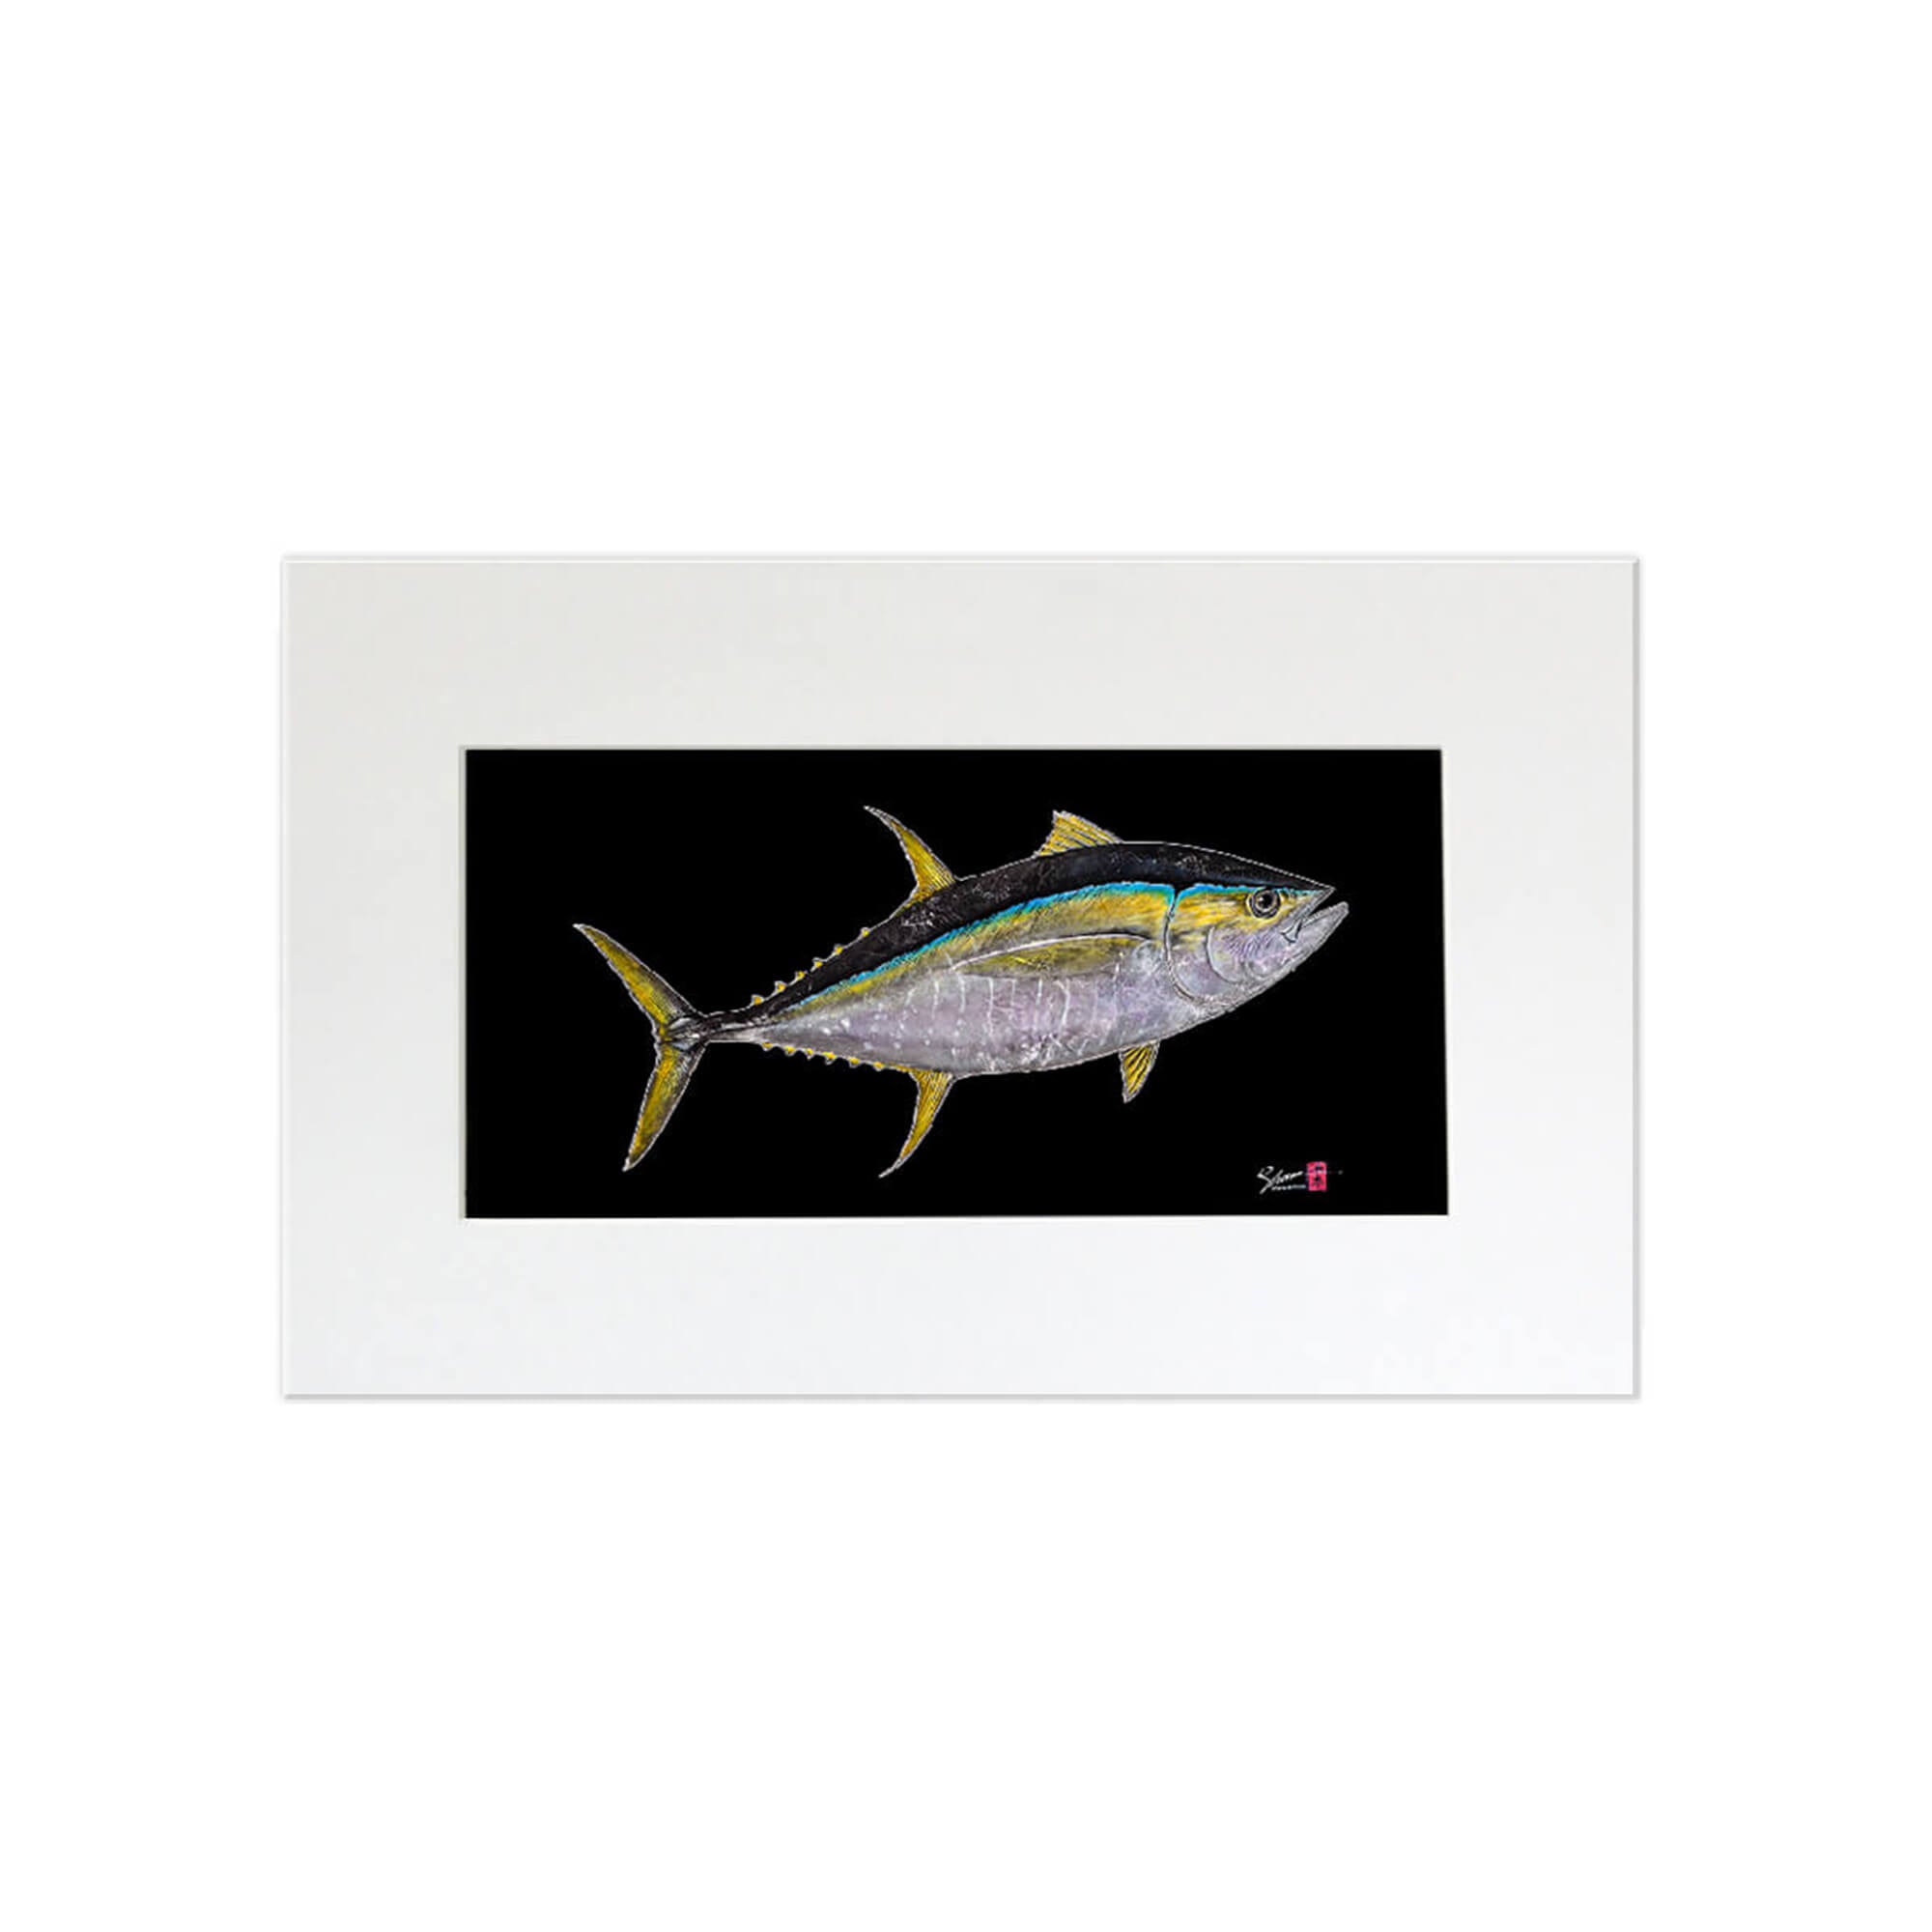 A matted print of Shibi (also known as Yellowfin Tuna) by Hawaii gyotaku artist Shane Hamoto